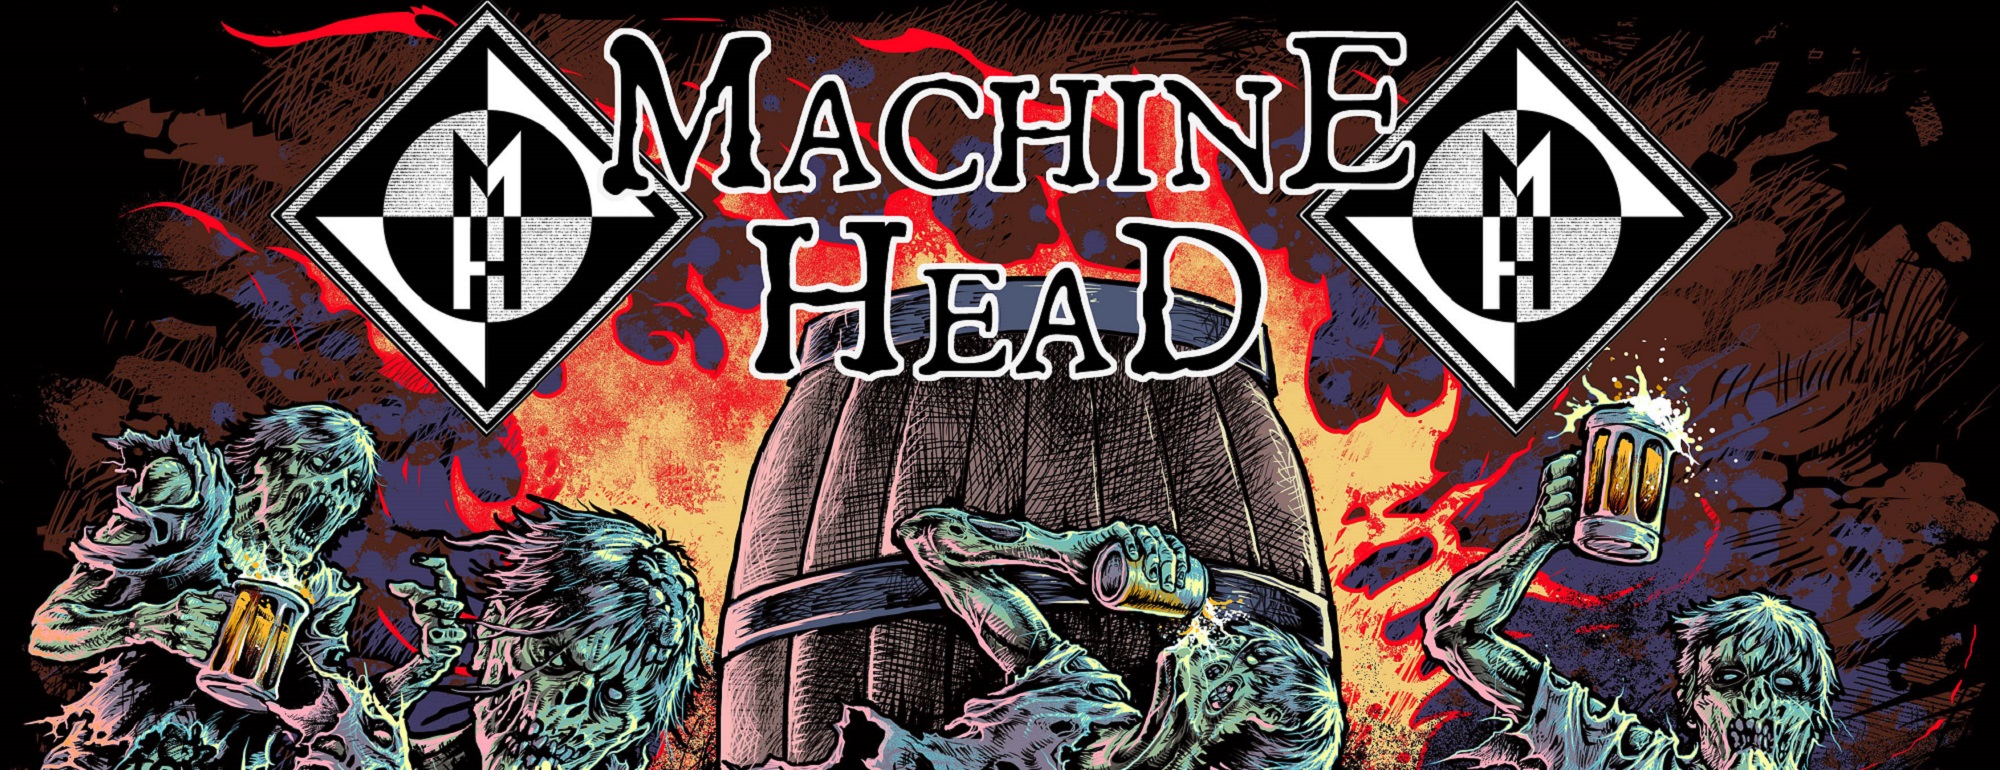 Machine Head artwork